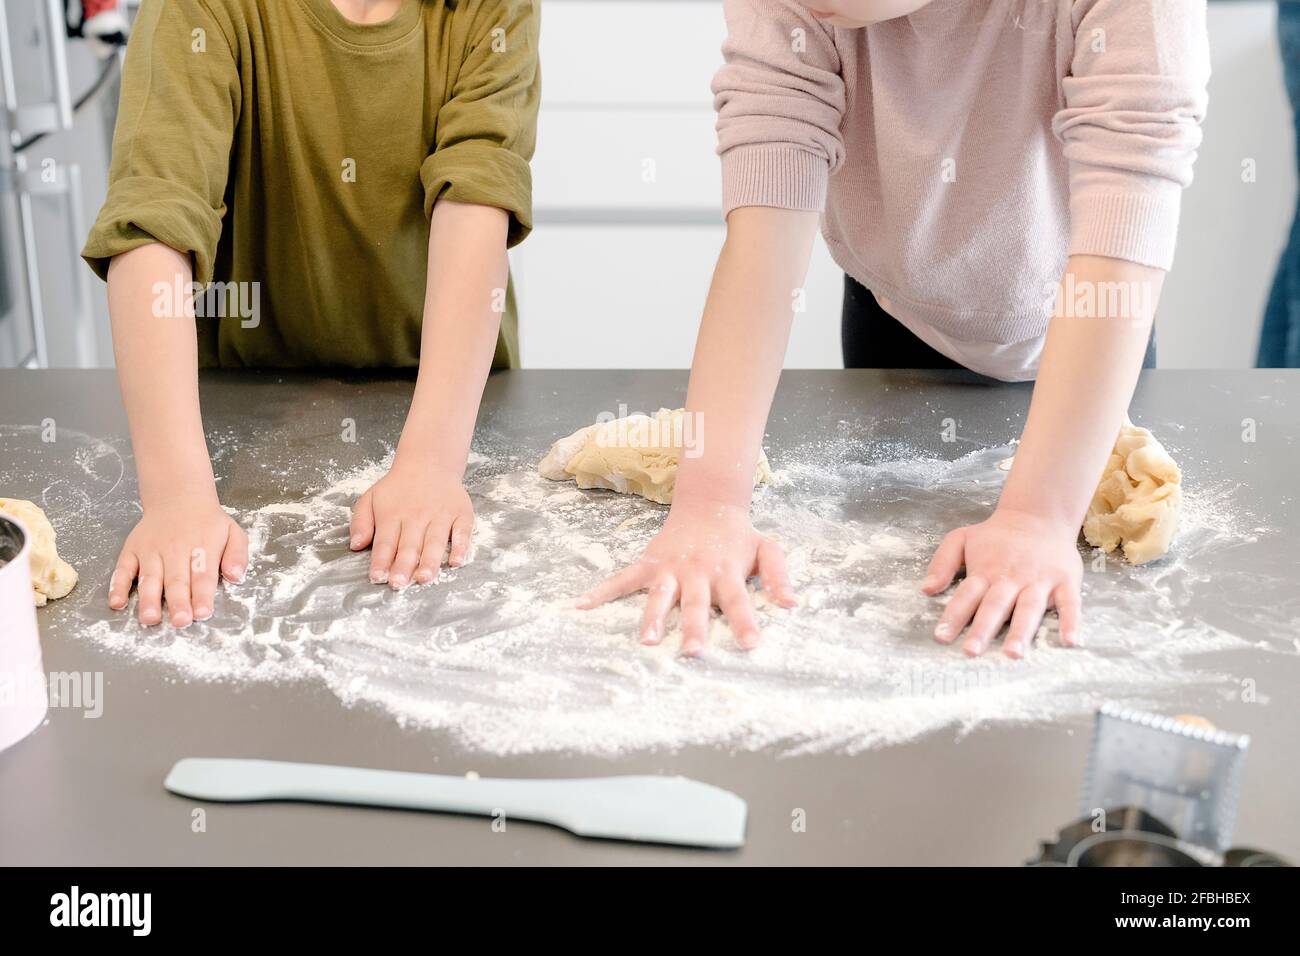 Children spreading flour on kitchen island at home Stock Photo